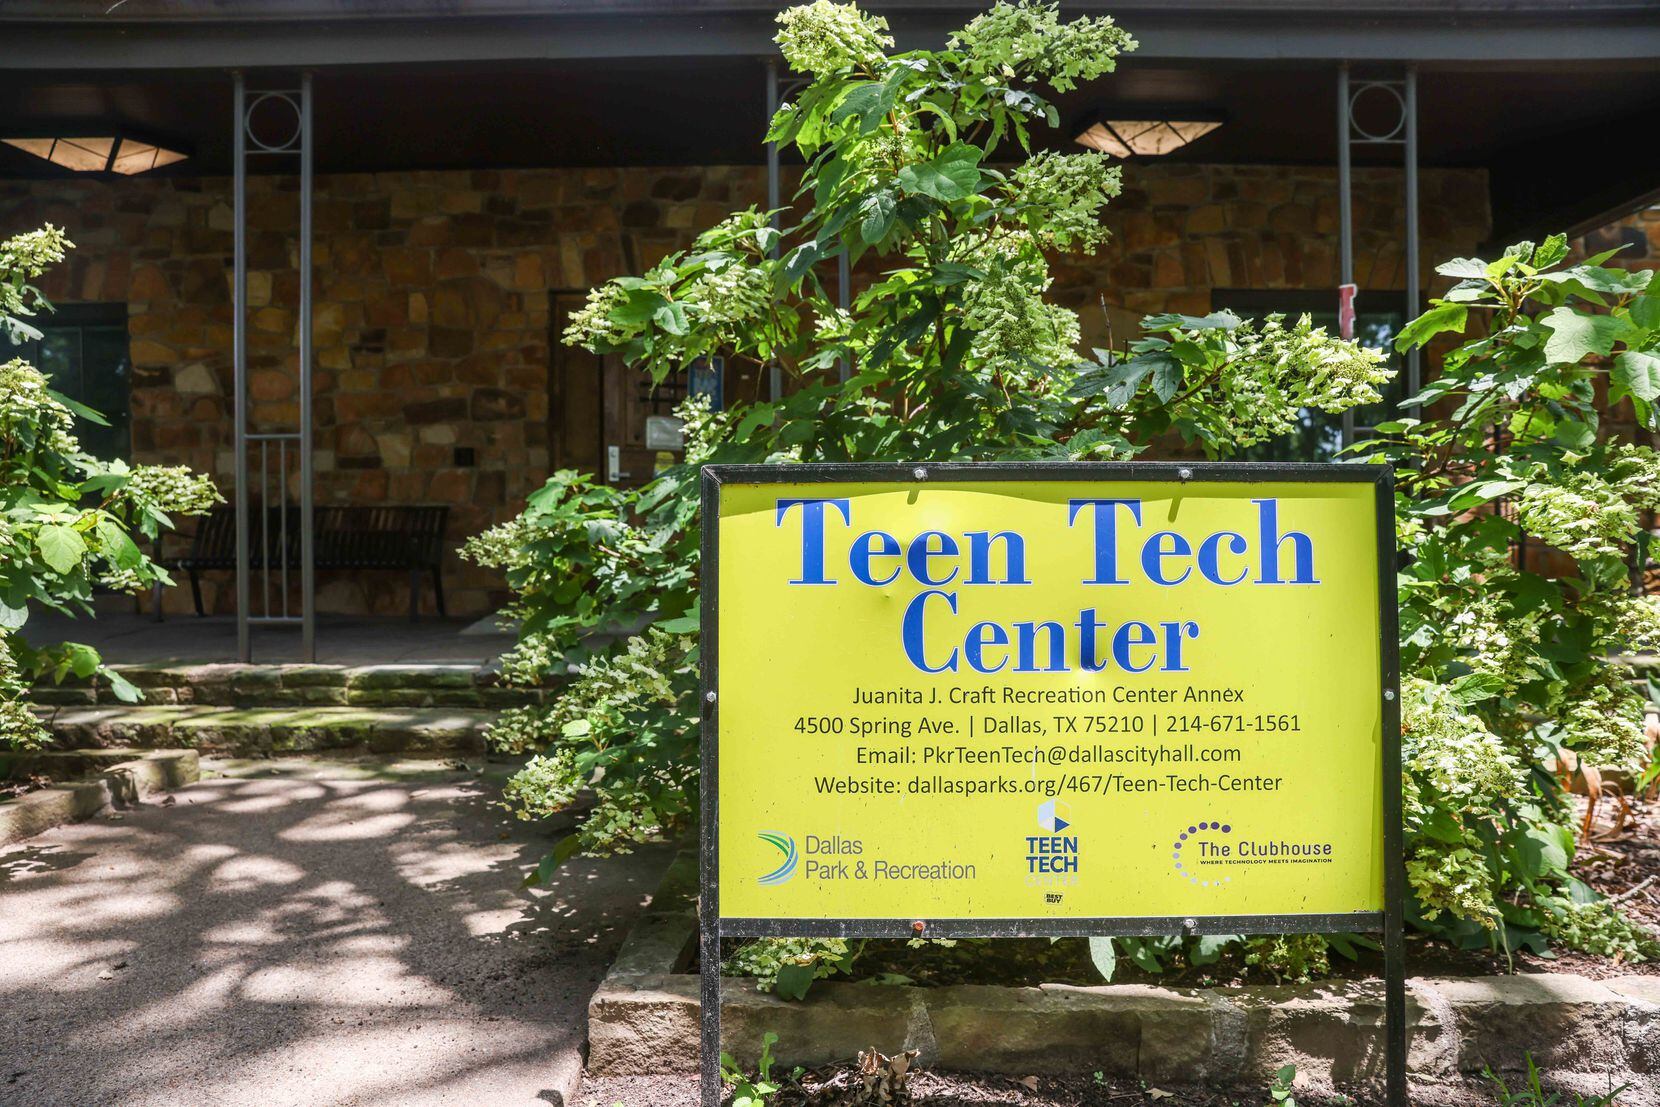 The Children's Technology Program at the Juanita J. Craft Recreation Center Annex in Dallas...